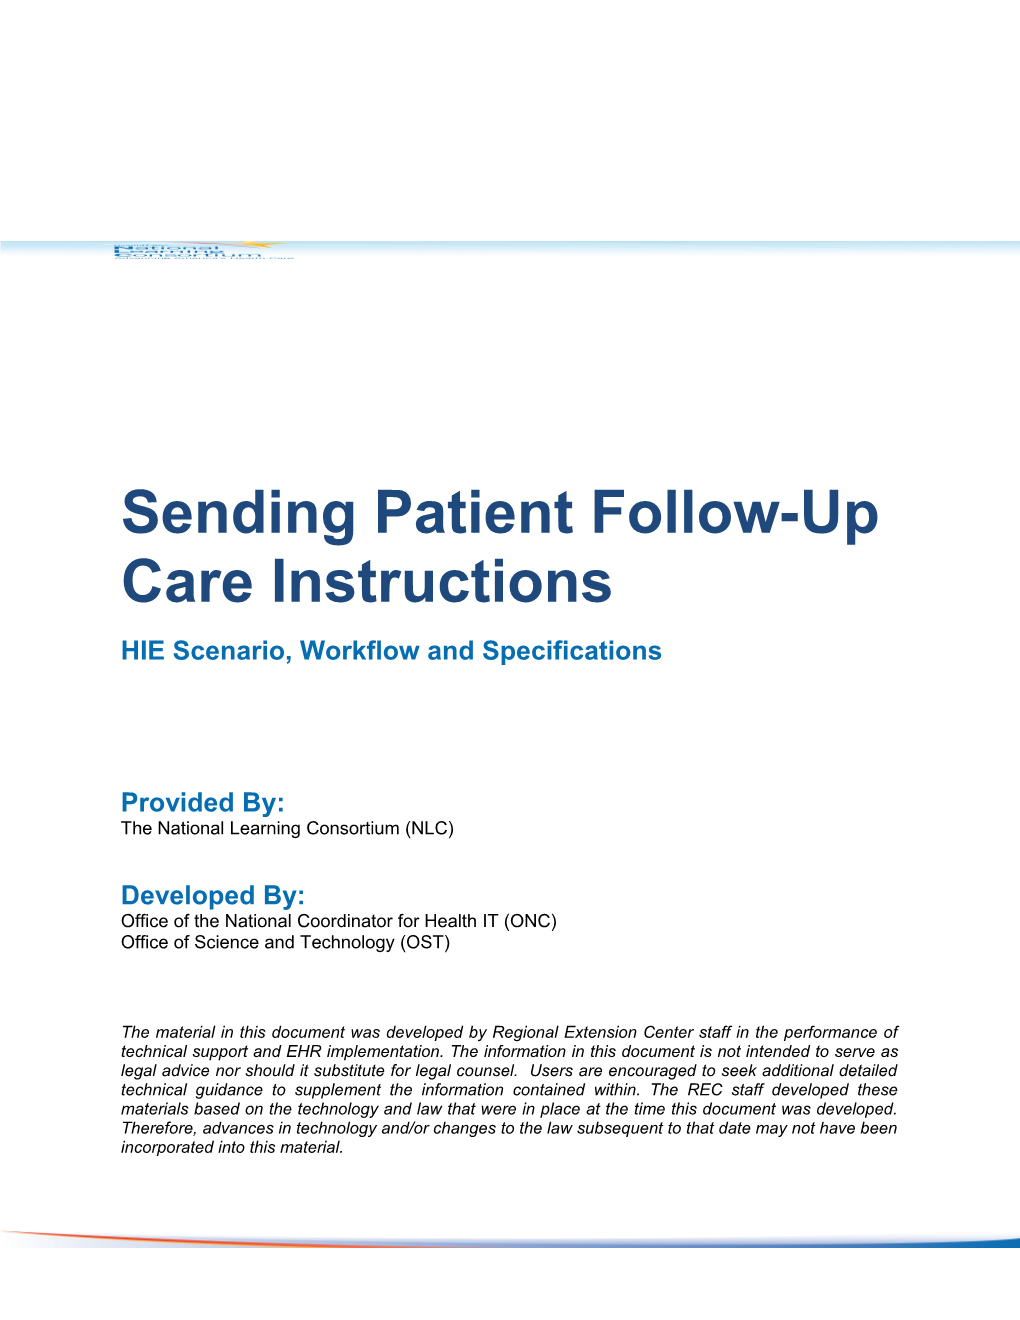 Sending Patient Follow-Up Care Instructions